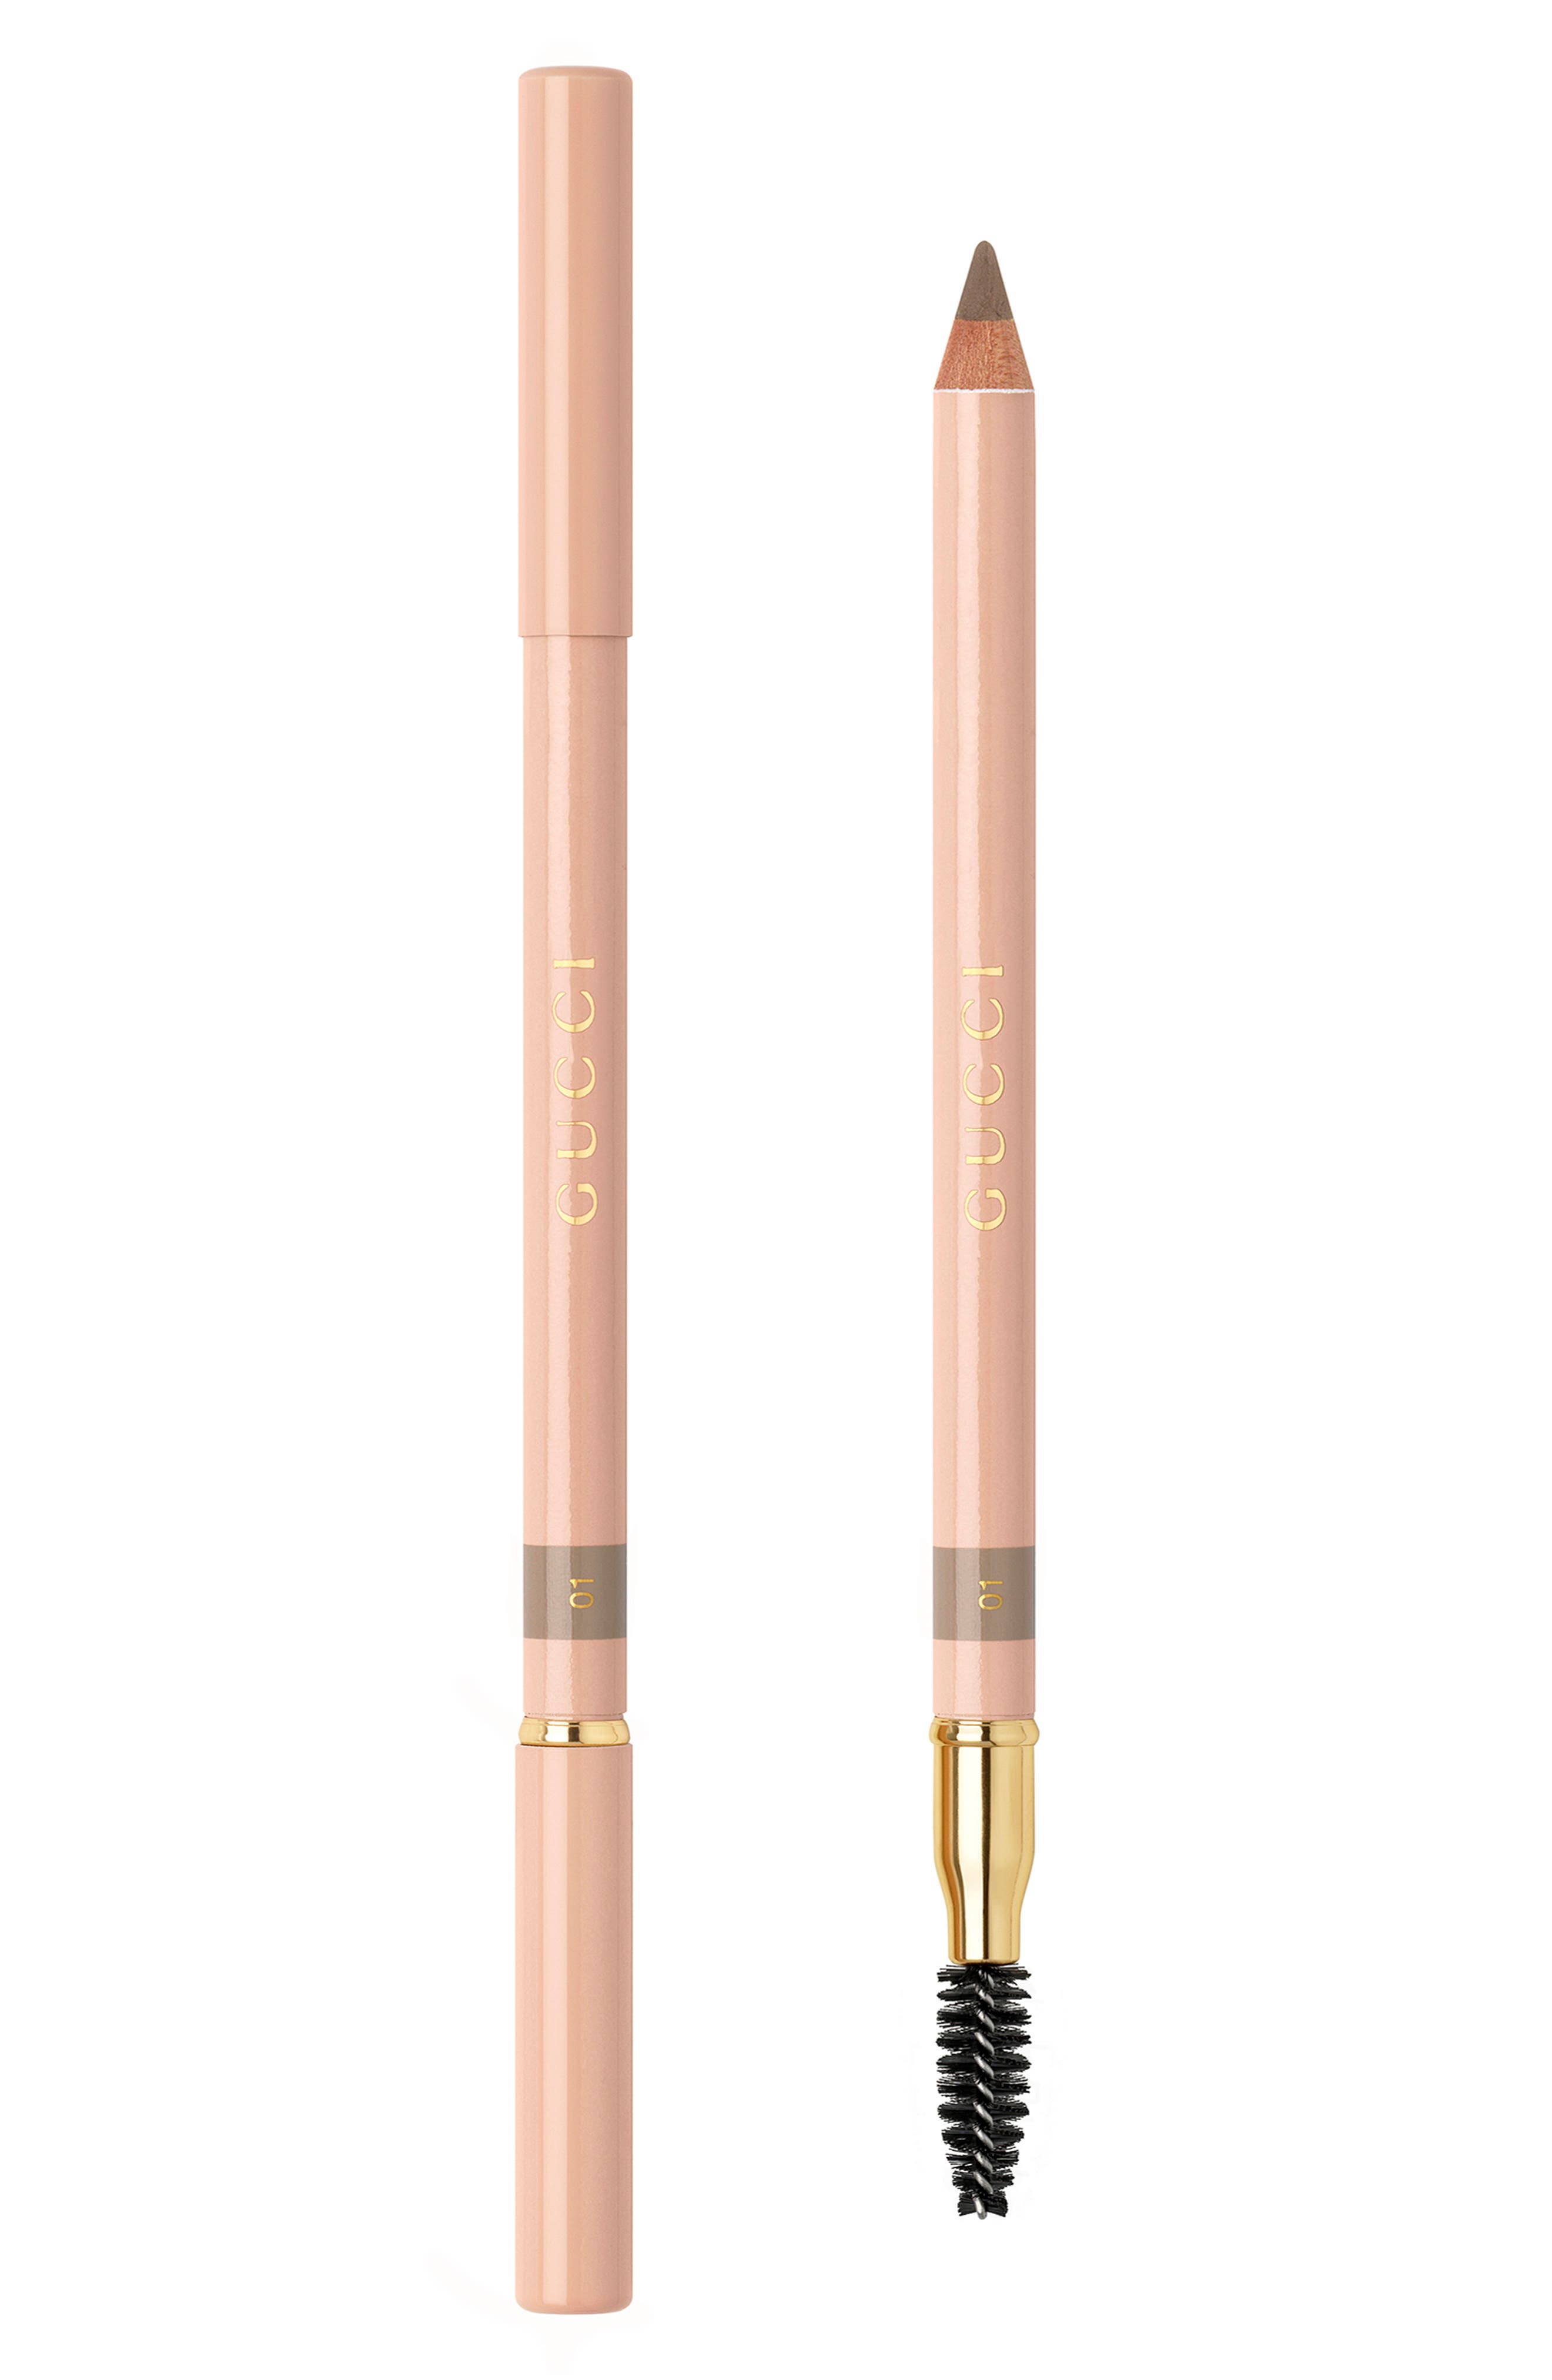 Gucci Crayon Definition Sourcils Powder Eyebrow Pencil in Gray Blond at Nordstrom